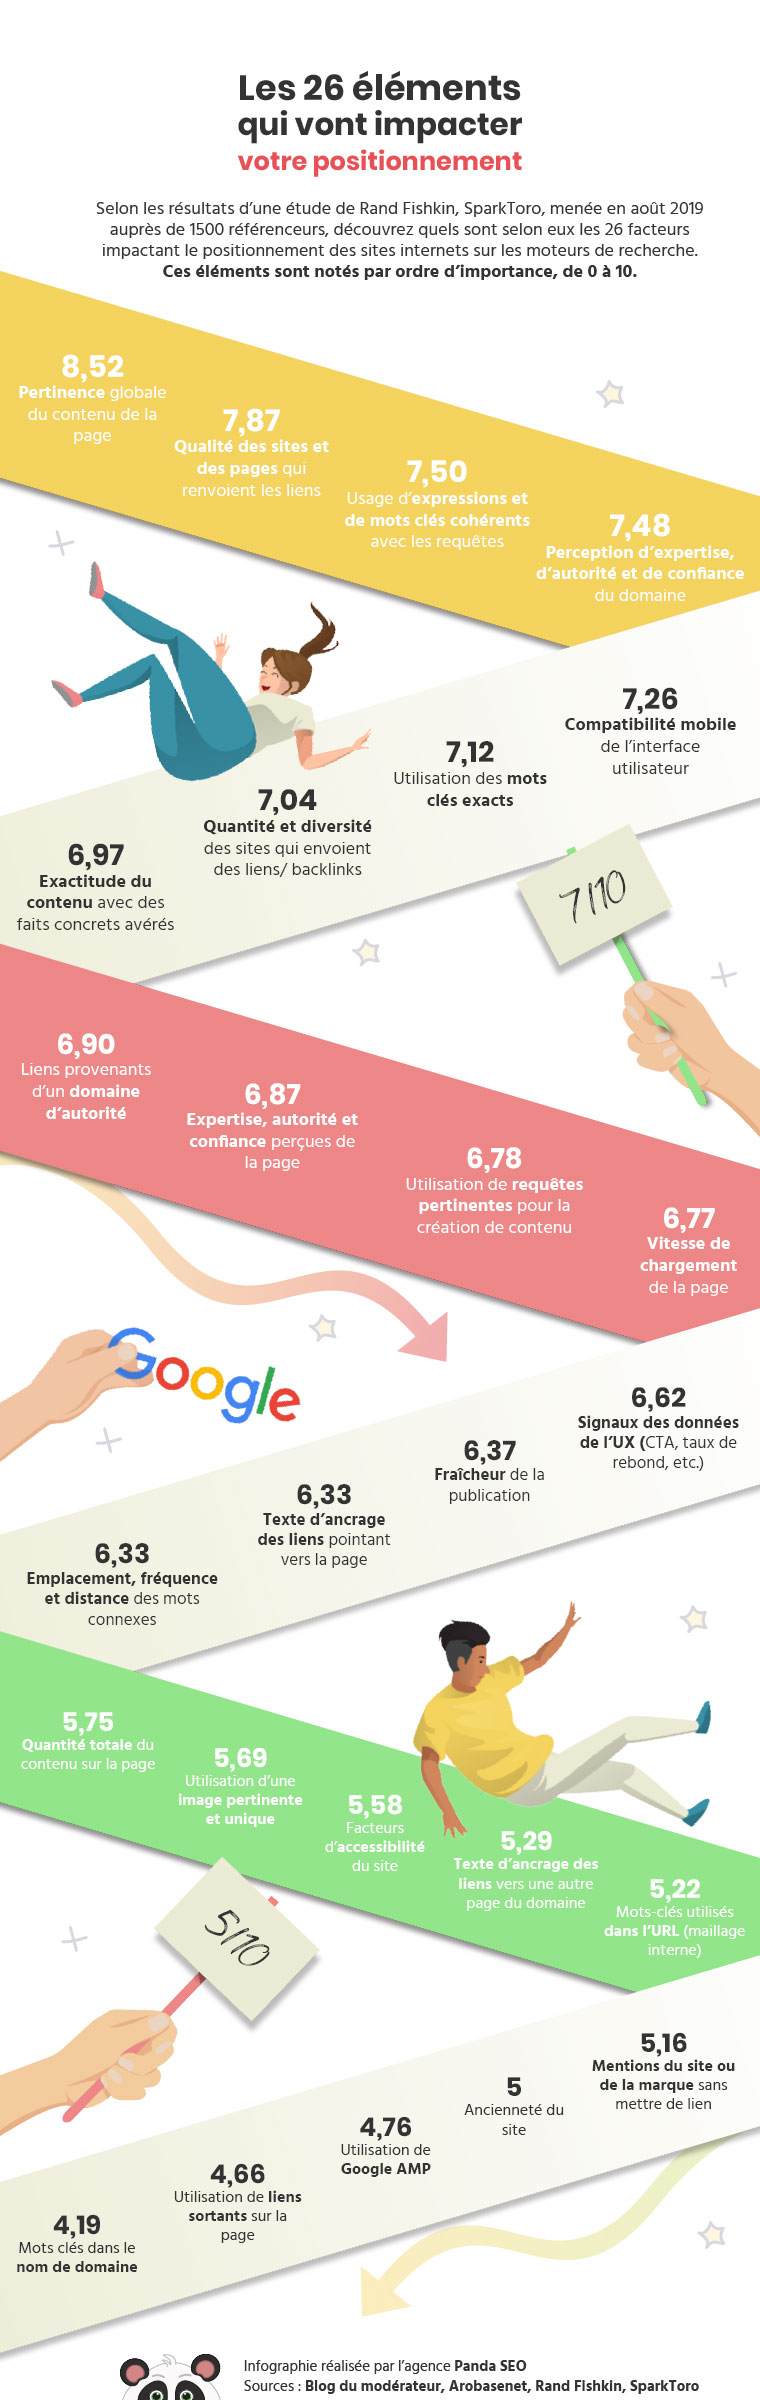 Google SEO criteria infographic